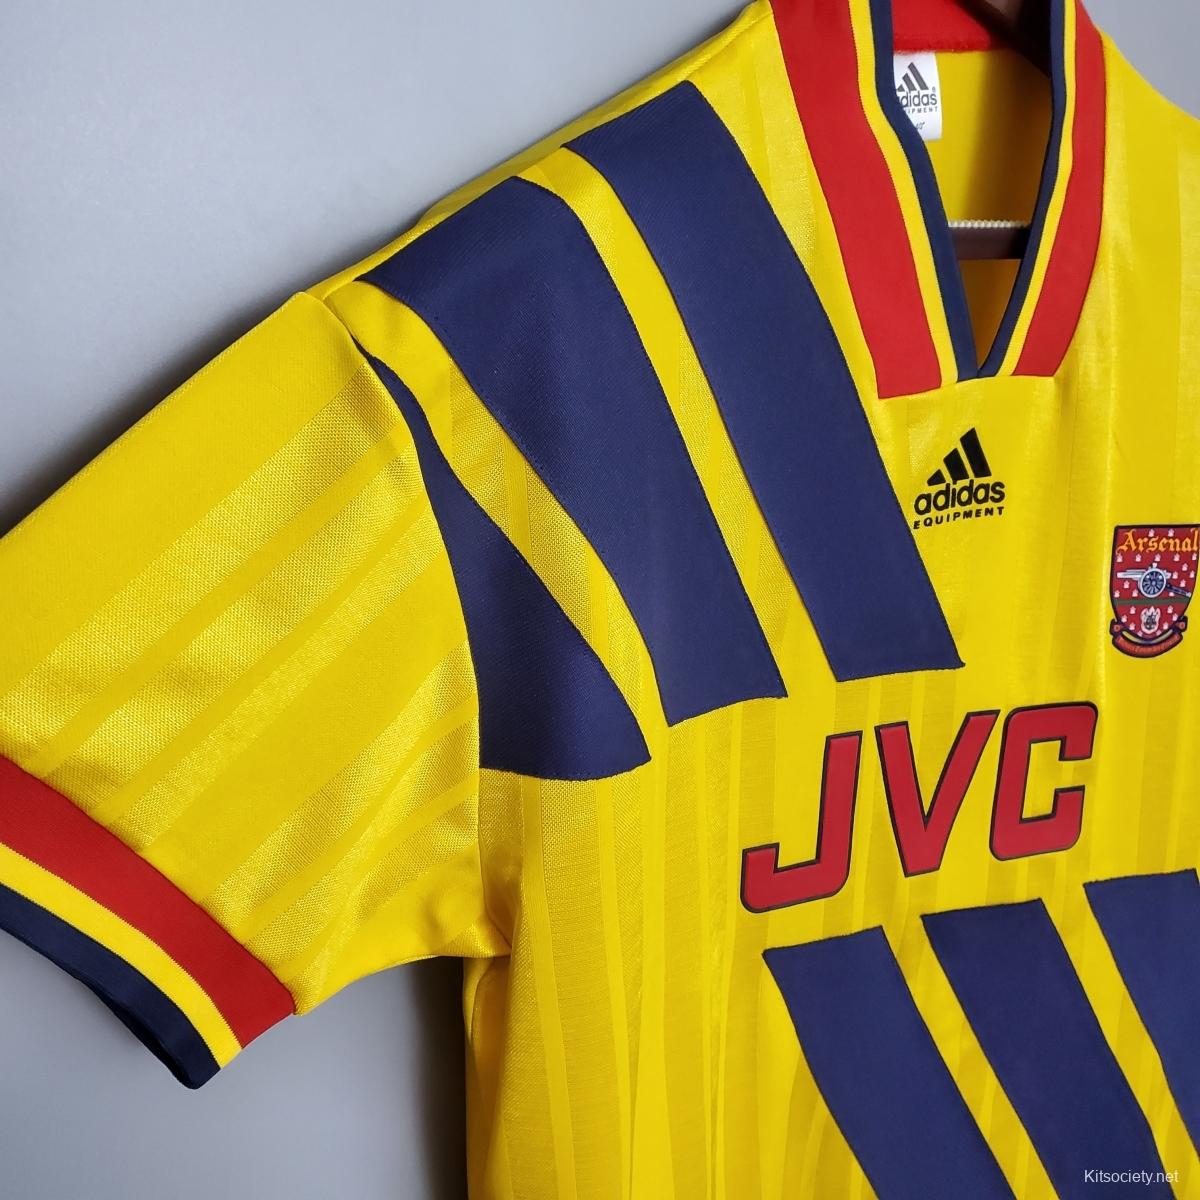 Arsenal 93/94 Away Classic Jersey